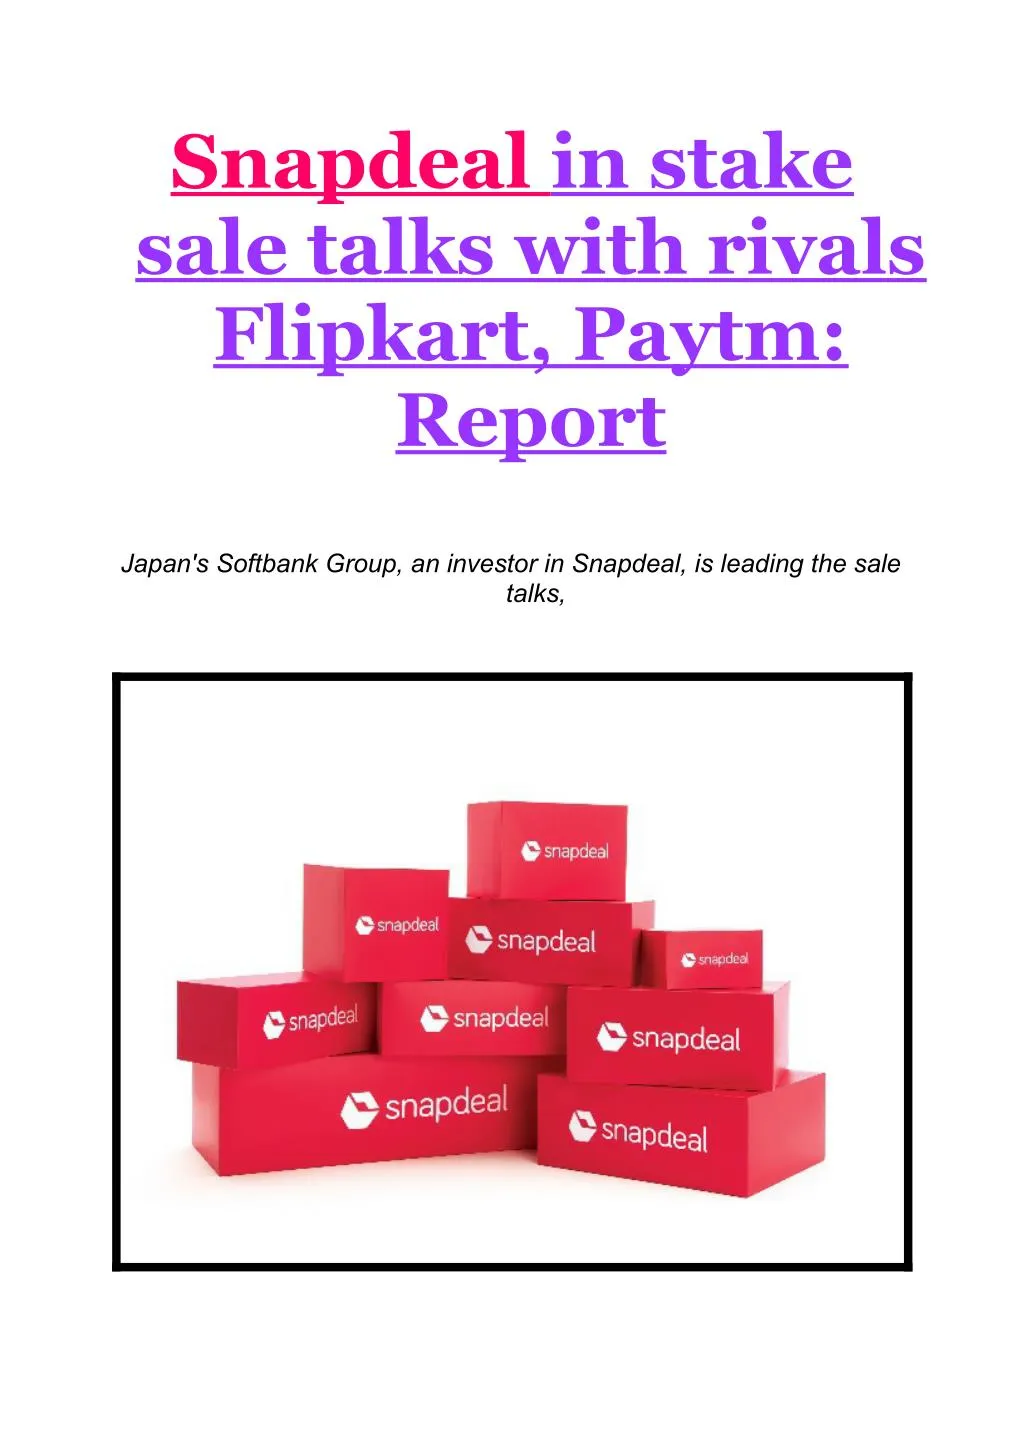 snapdeal sale talks with rivals flipkart paytm